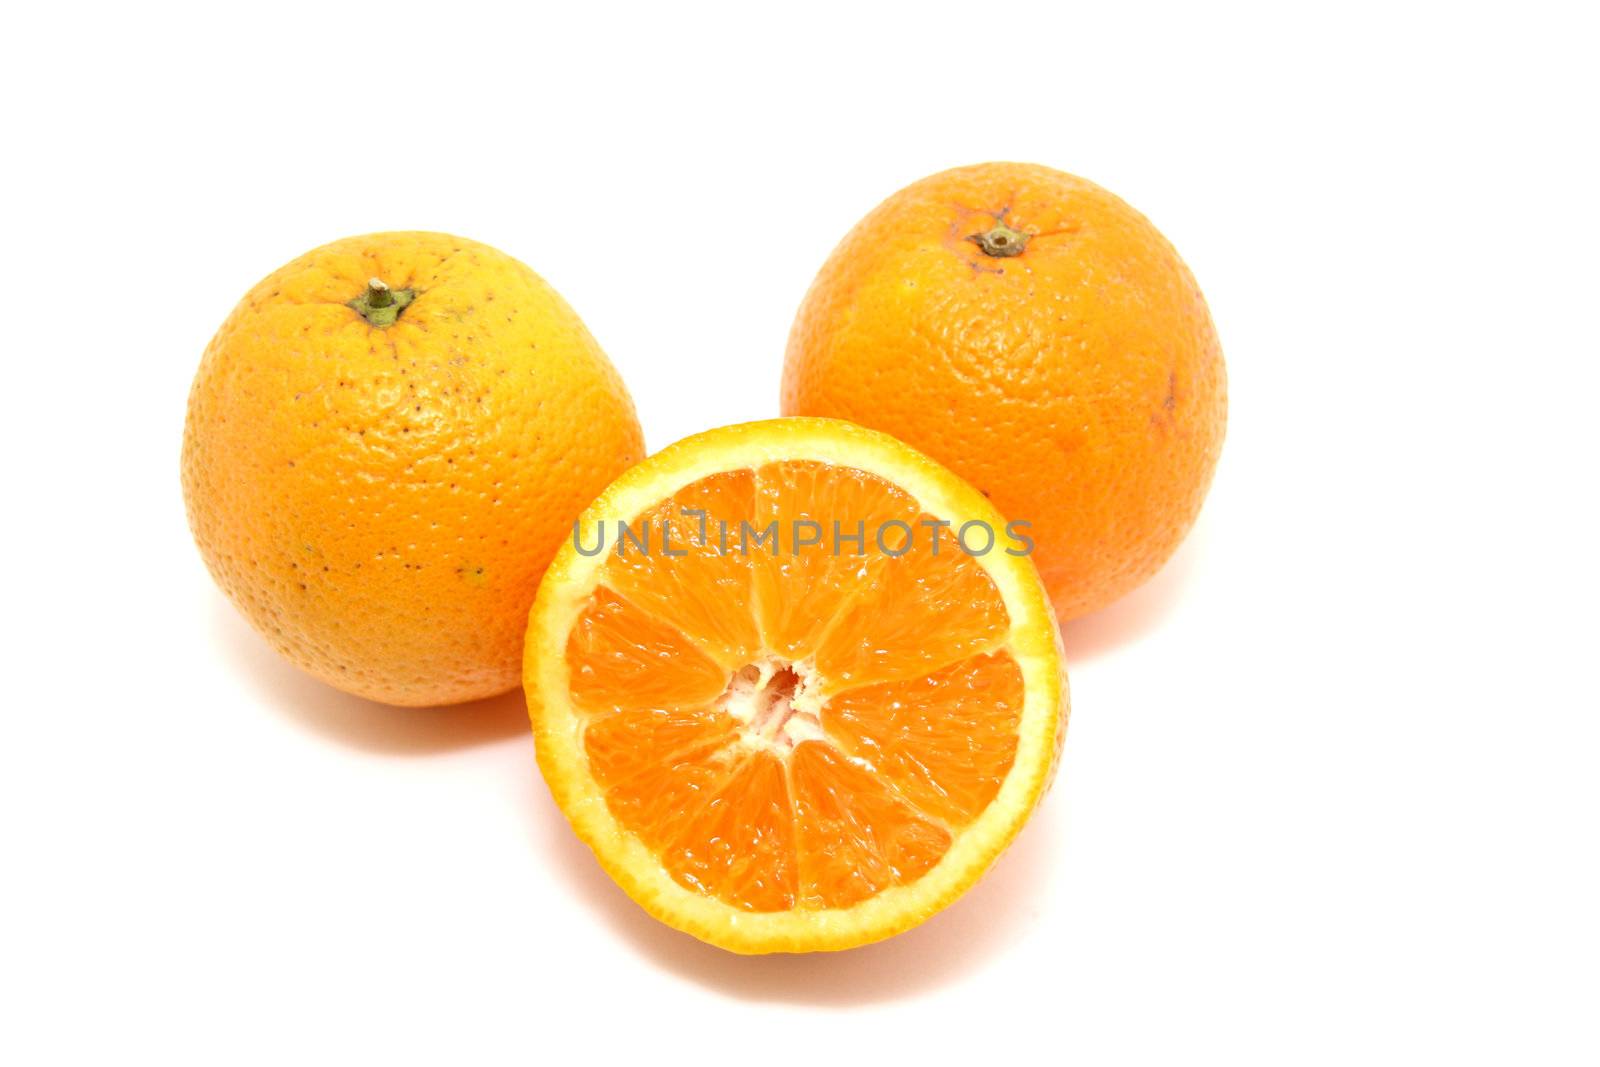 oranges by jpcasais